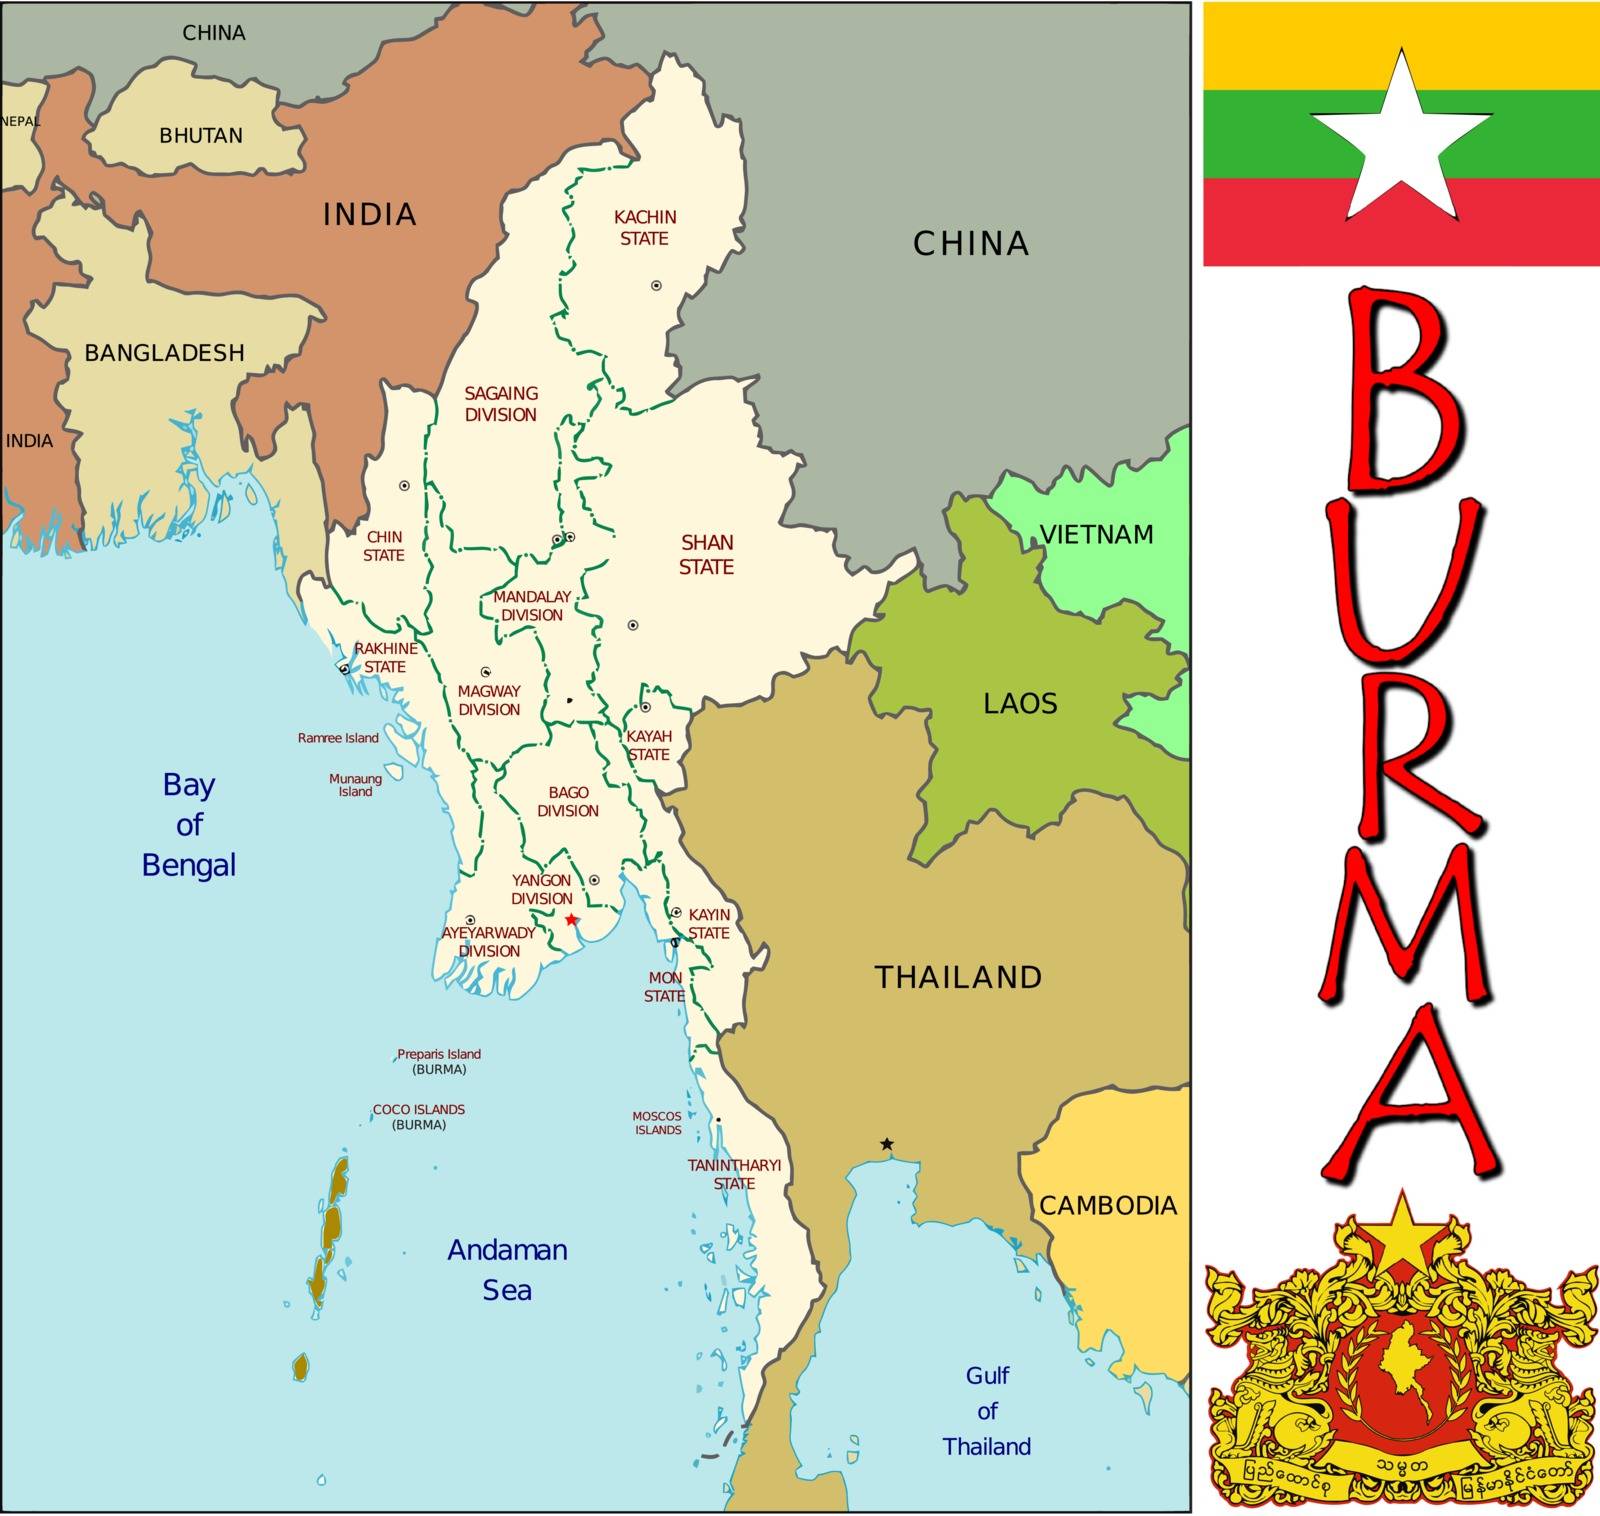 Burma divisions